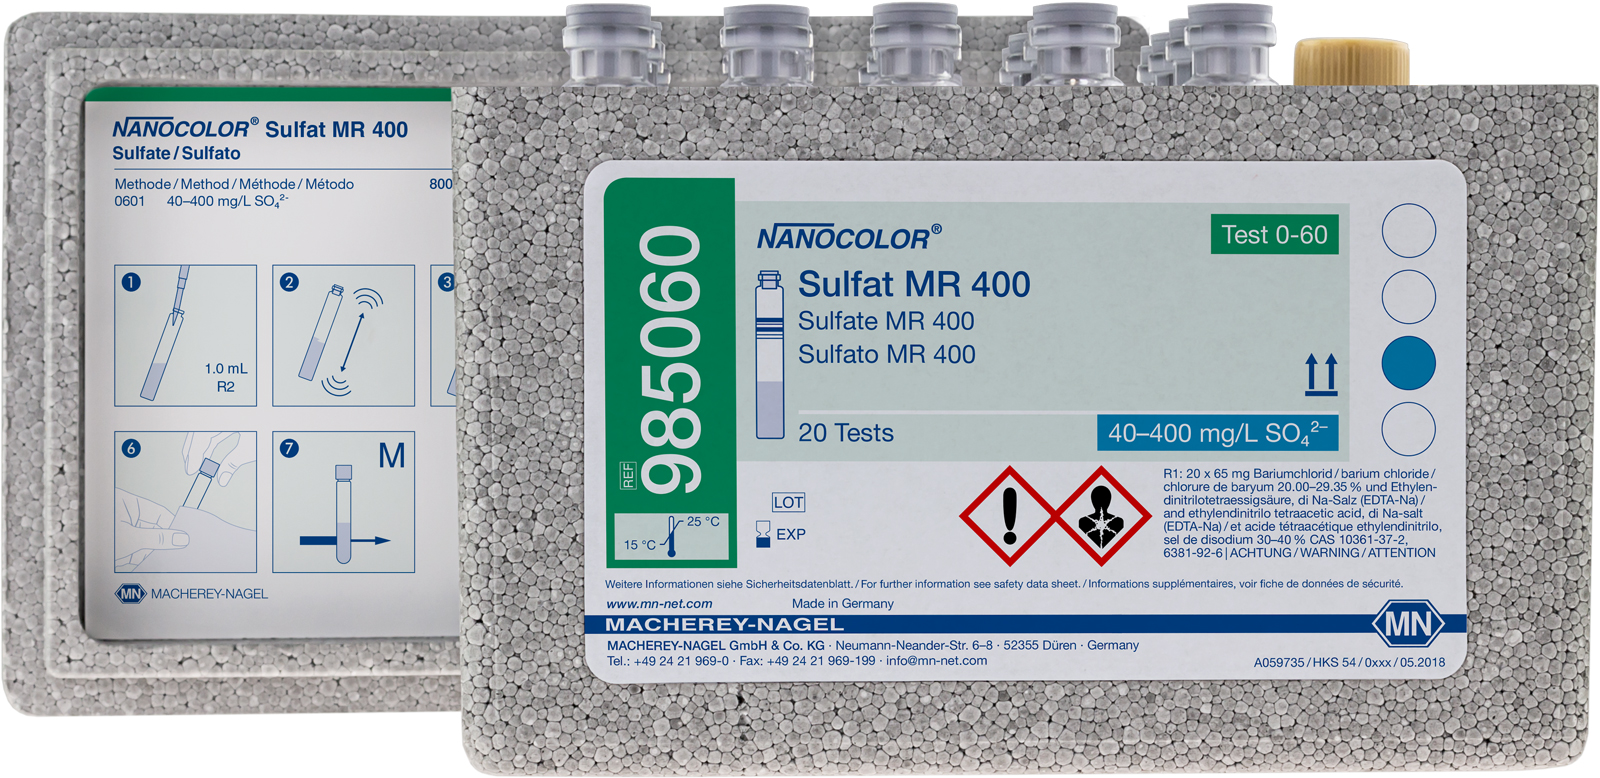 RUK NANOCOLOR-Sulfat MR 400